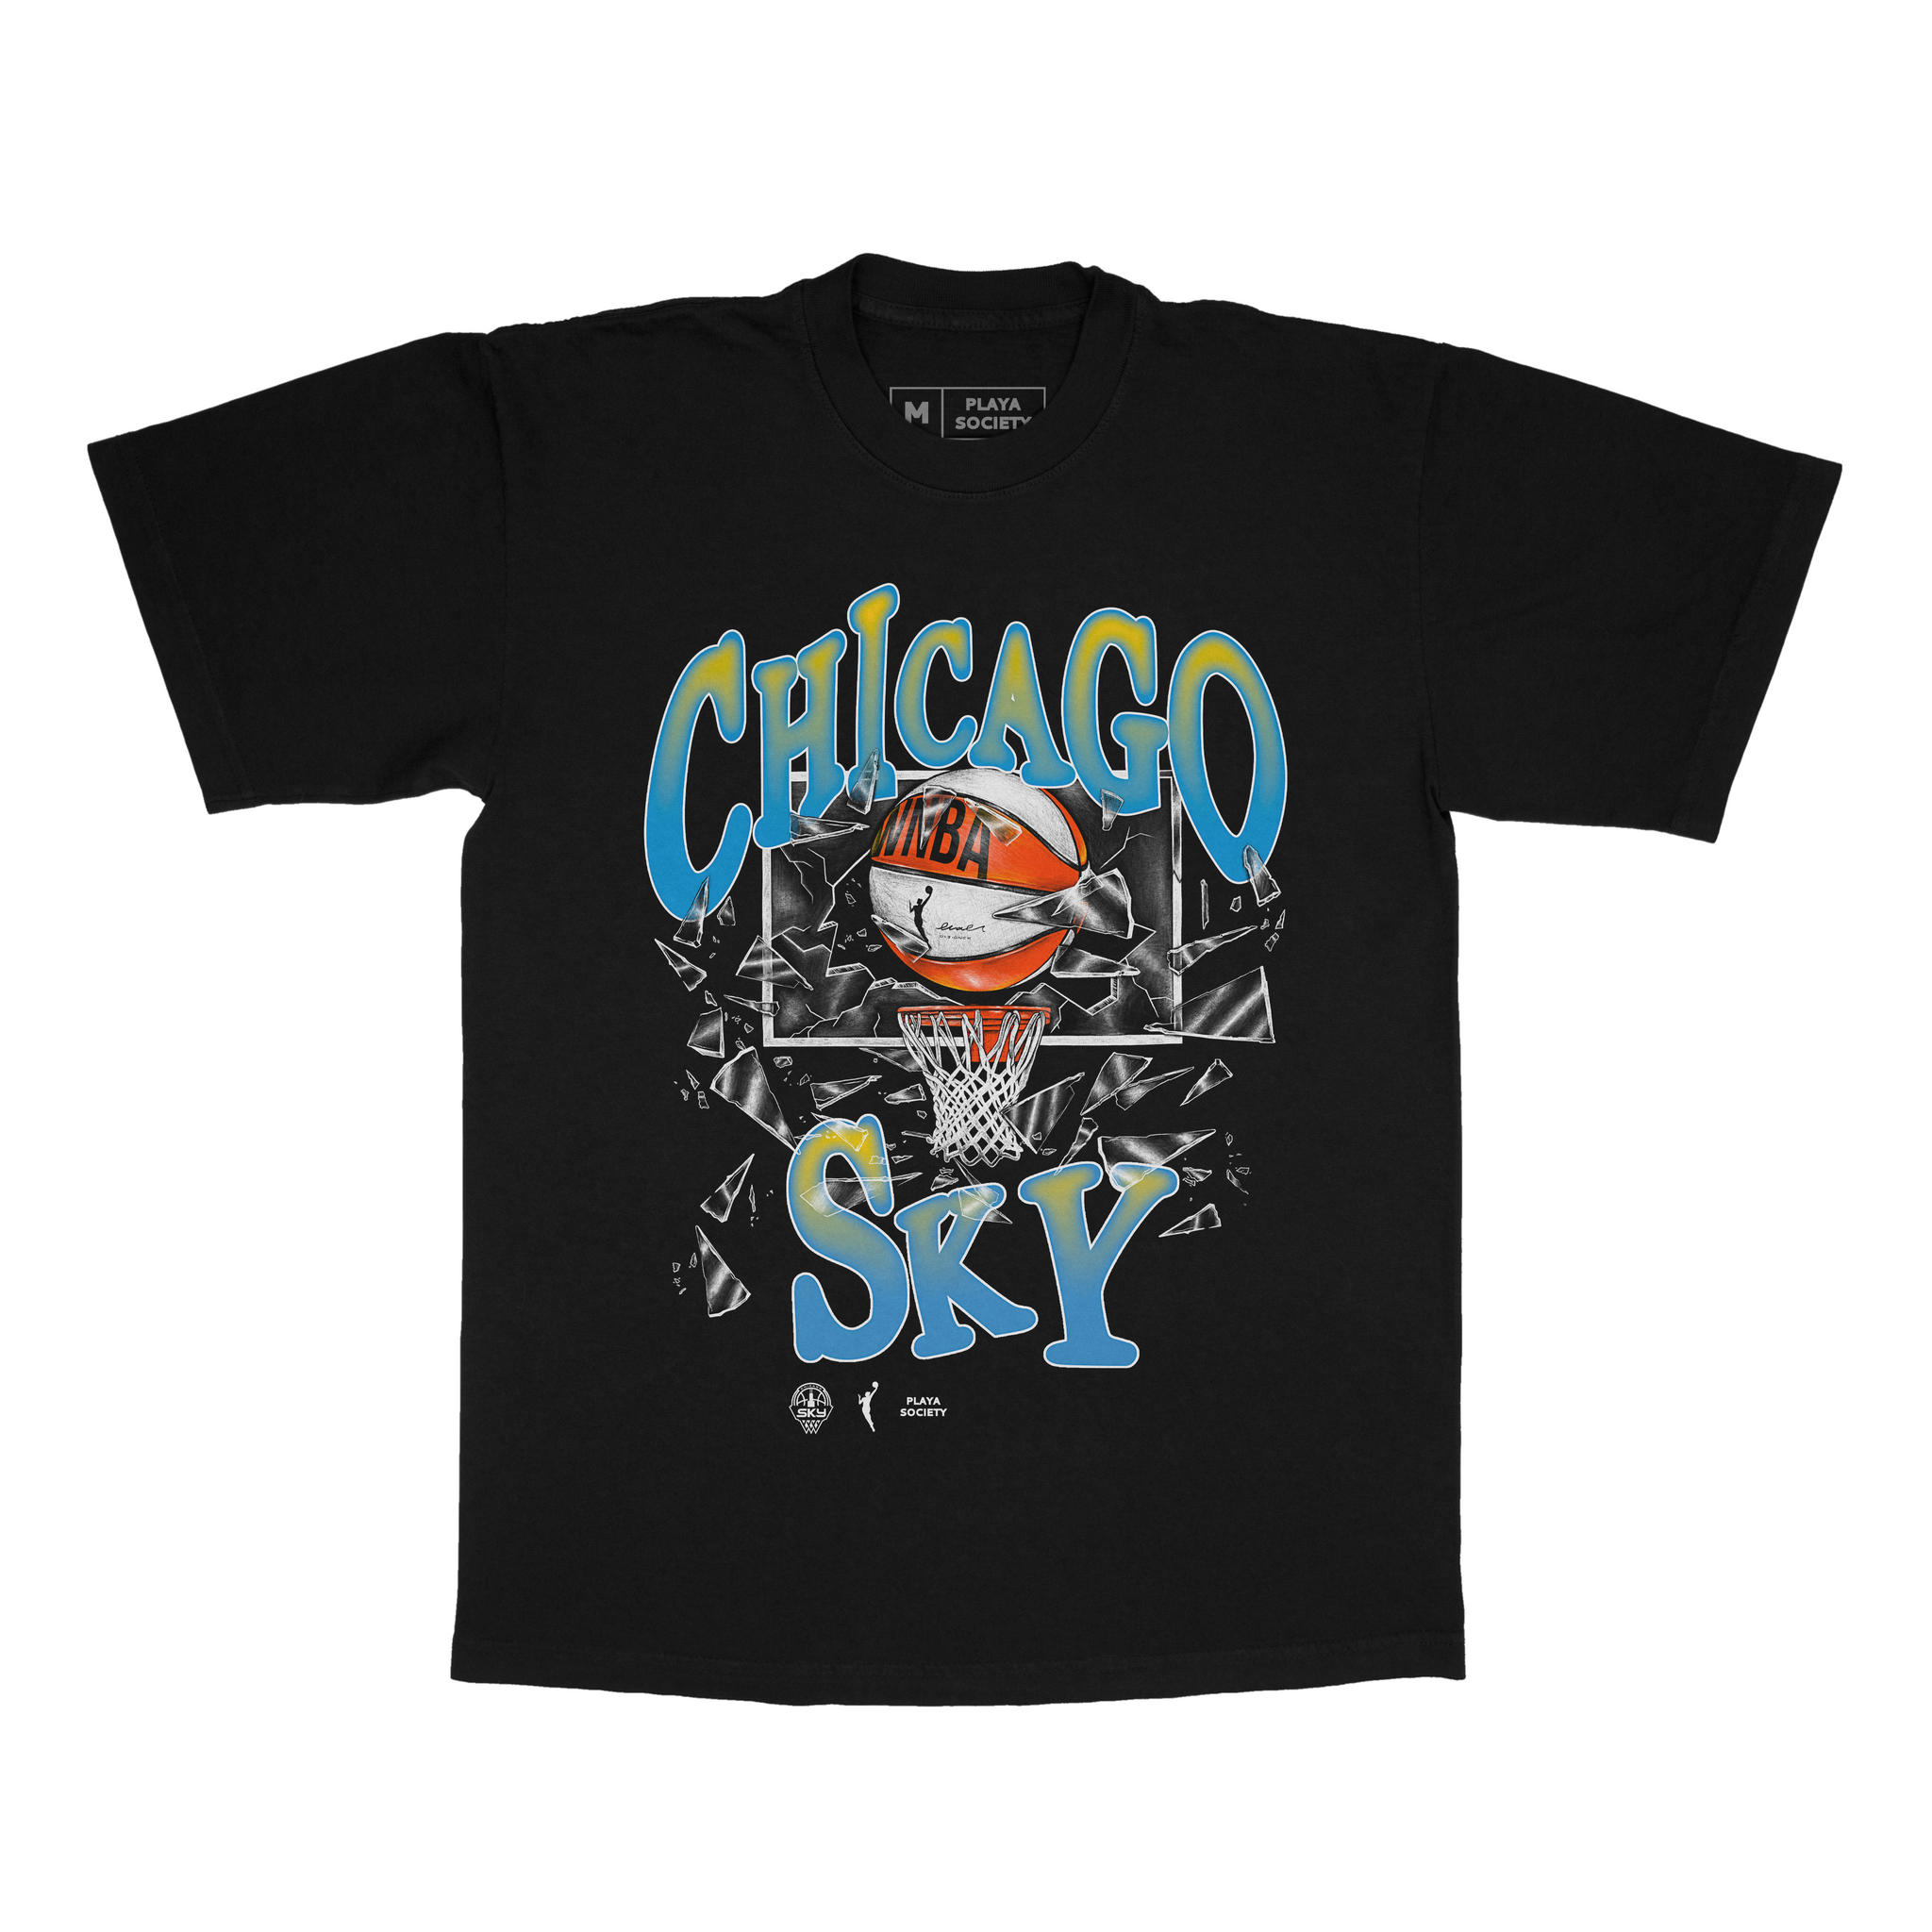 Chicago Sky "Shattered Glass" T-shirt